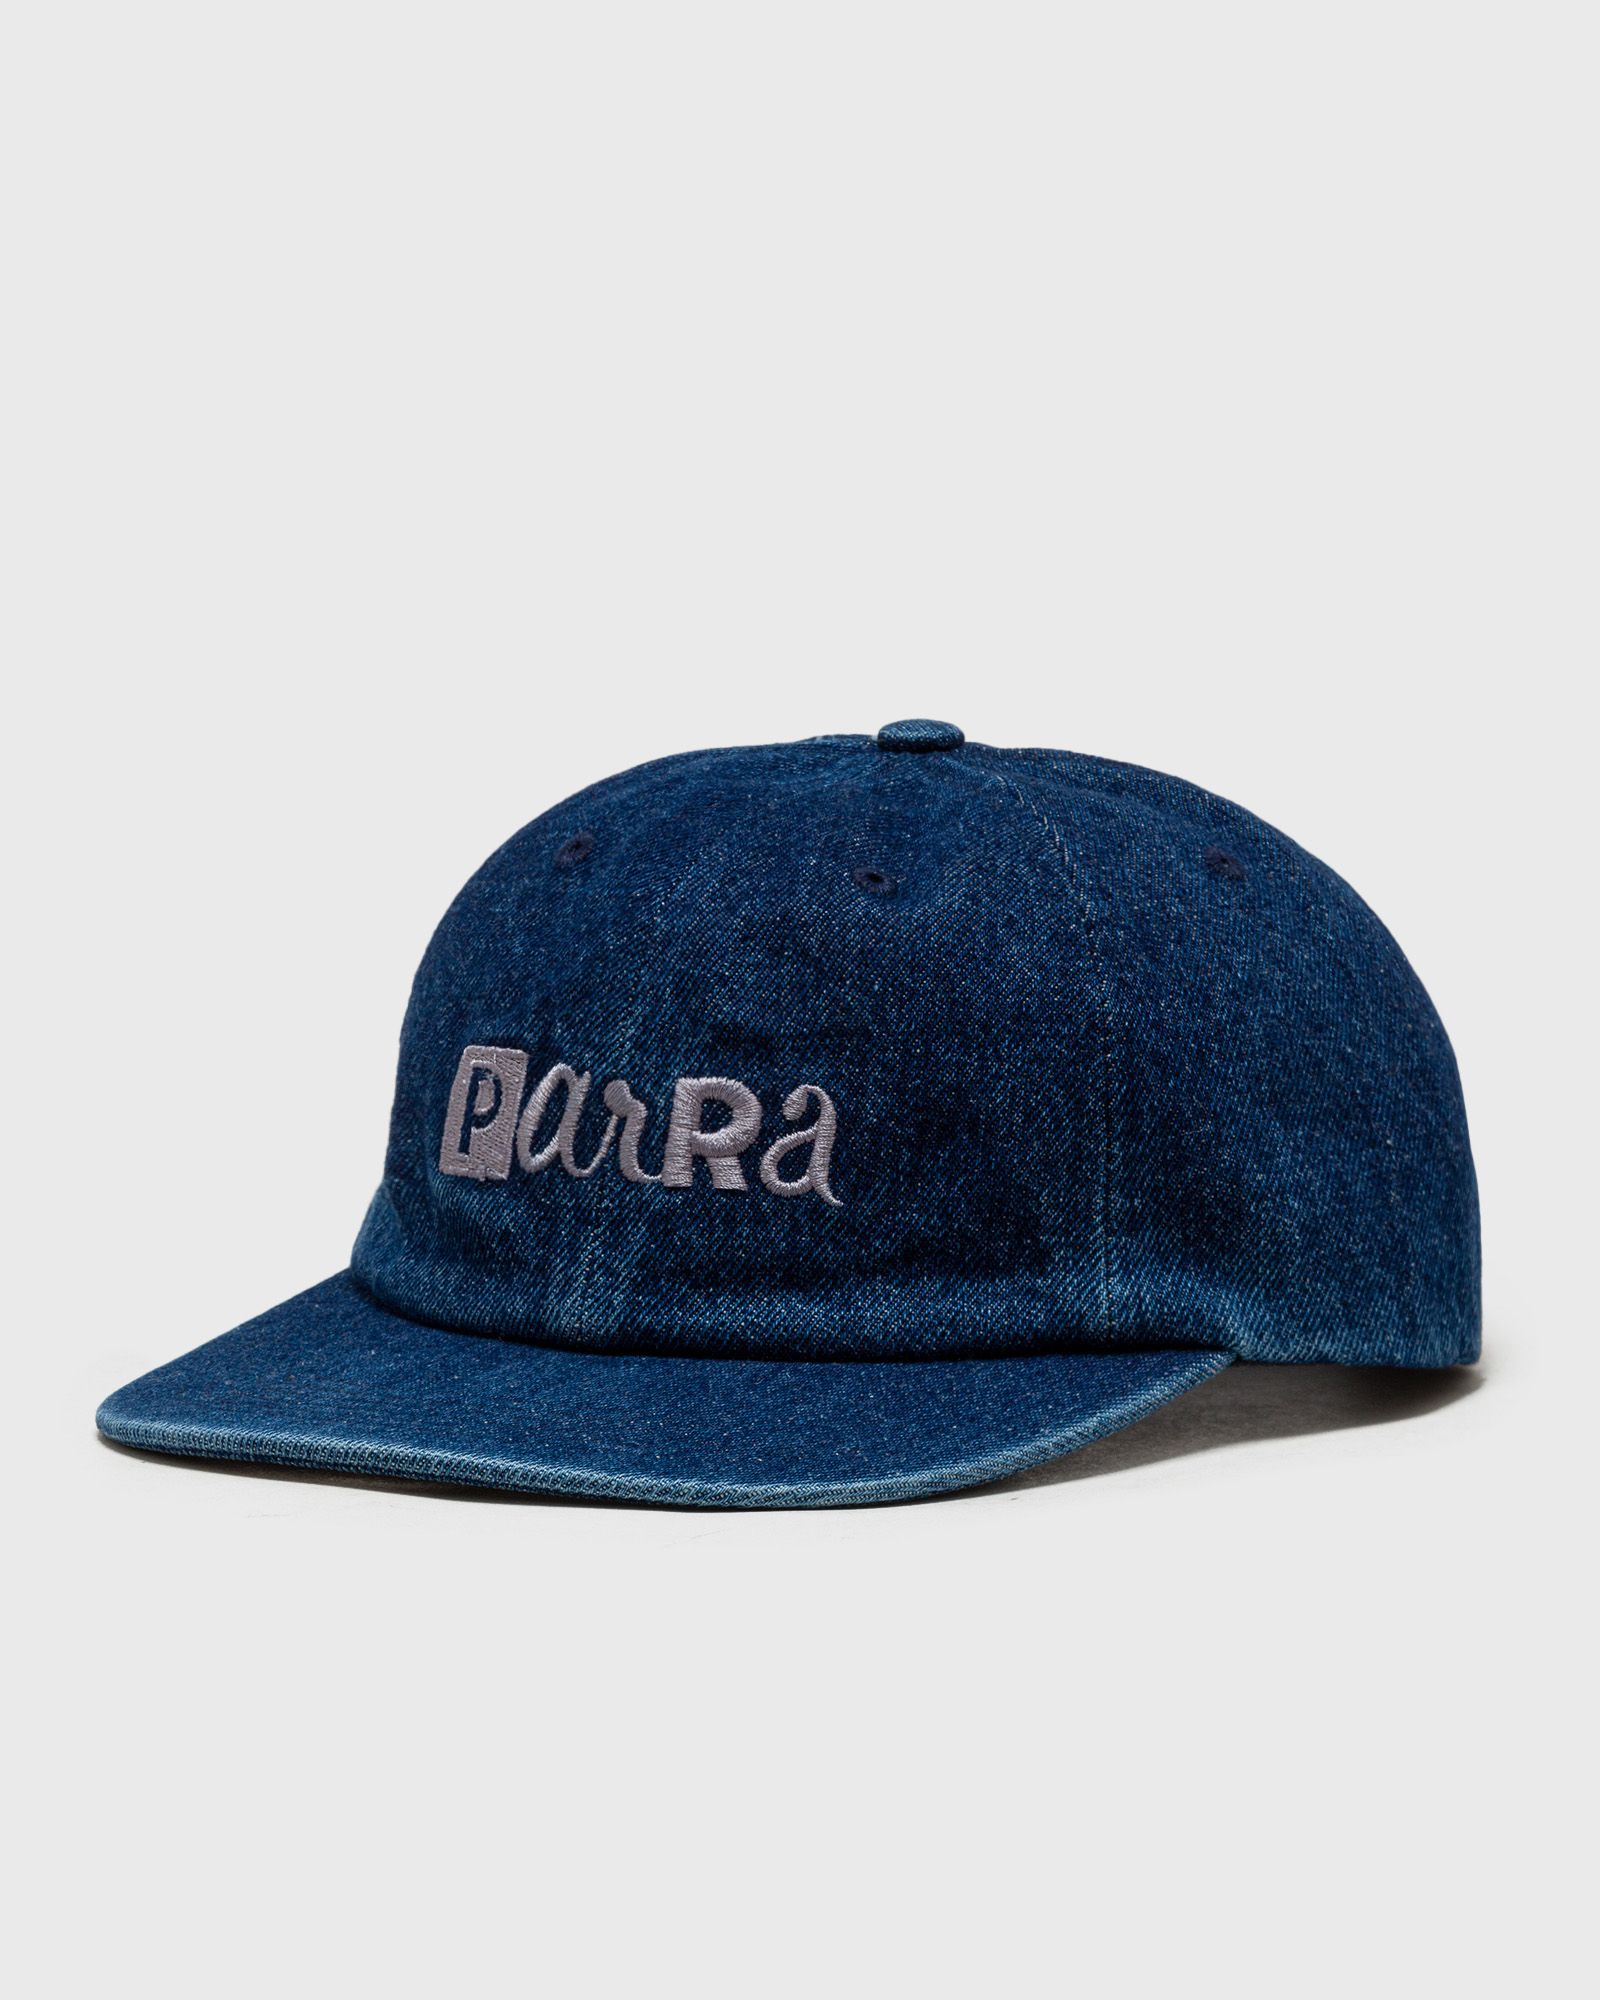 By Parra - blocked logo 6 panel hat men caps blue in größe:one size